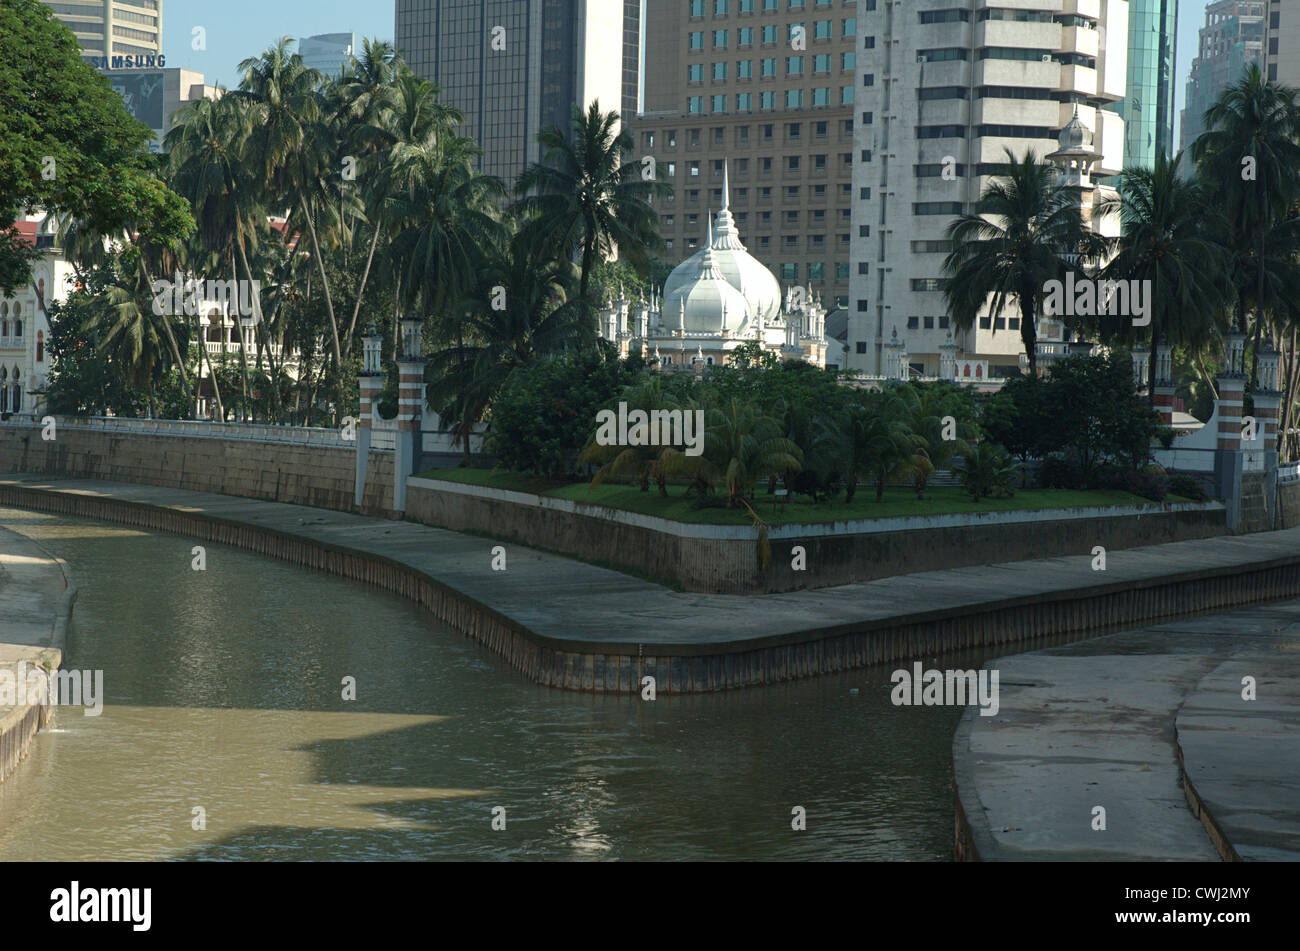 Confluence of the Klang and Gombak rivers, seen from the Leboh Pasar Besar bridge, Kuala Lumpur, Malaysia. Stock Photo